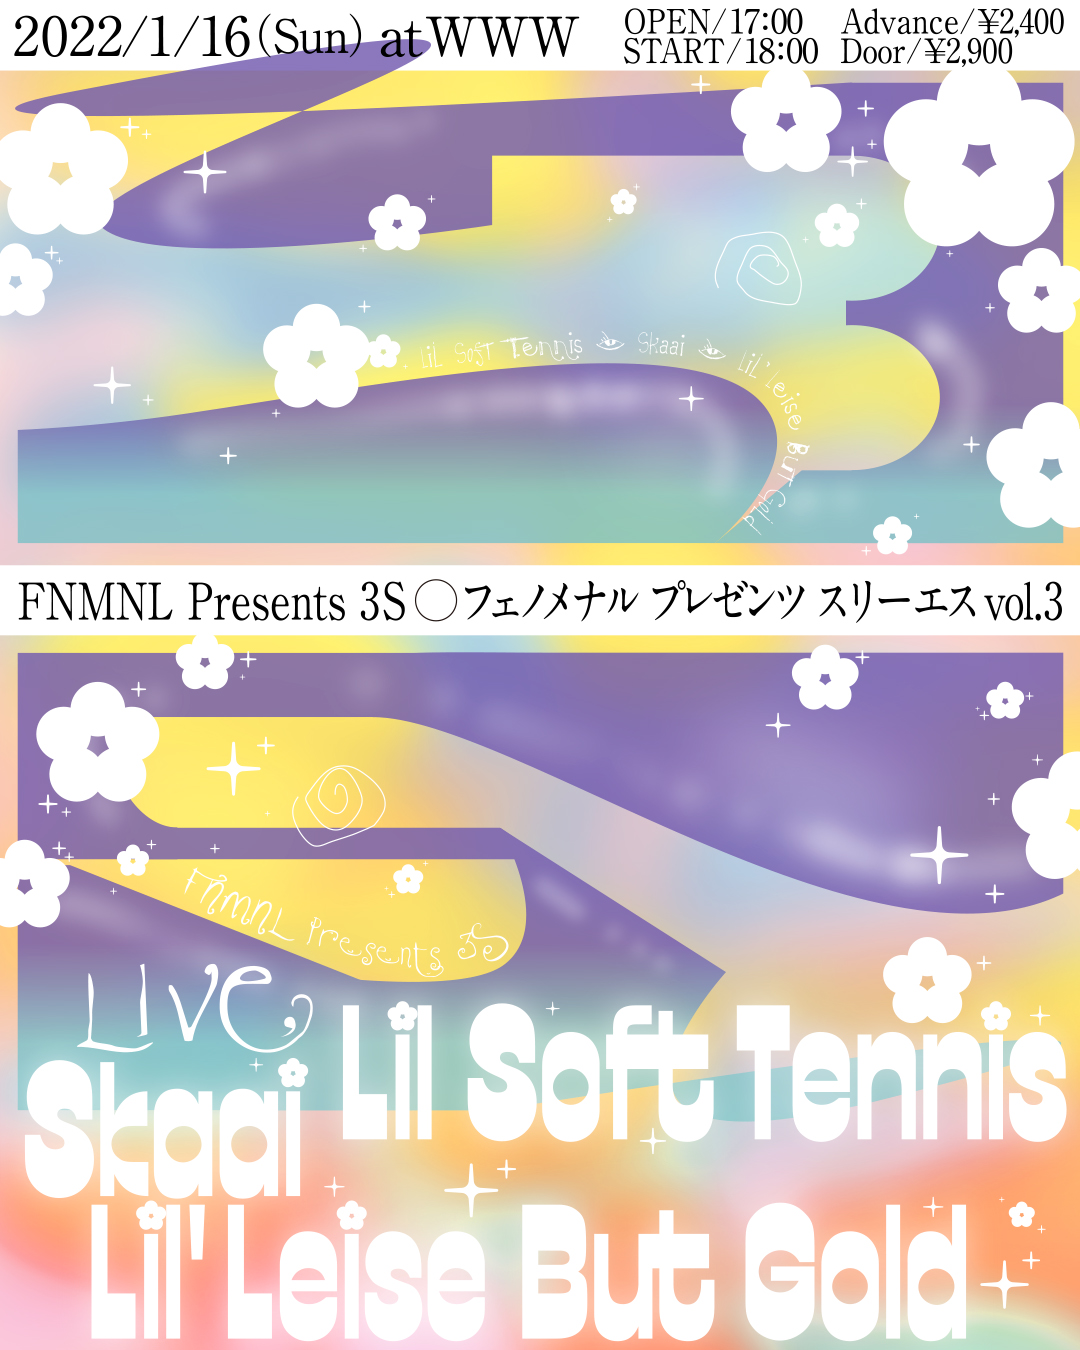 Lil' Leise But Gold / Lil Soft Tennis / Skaai